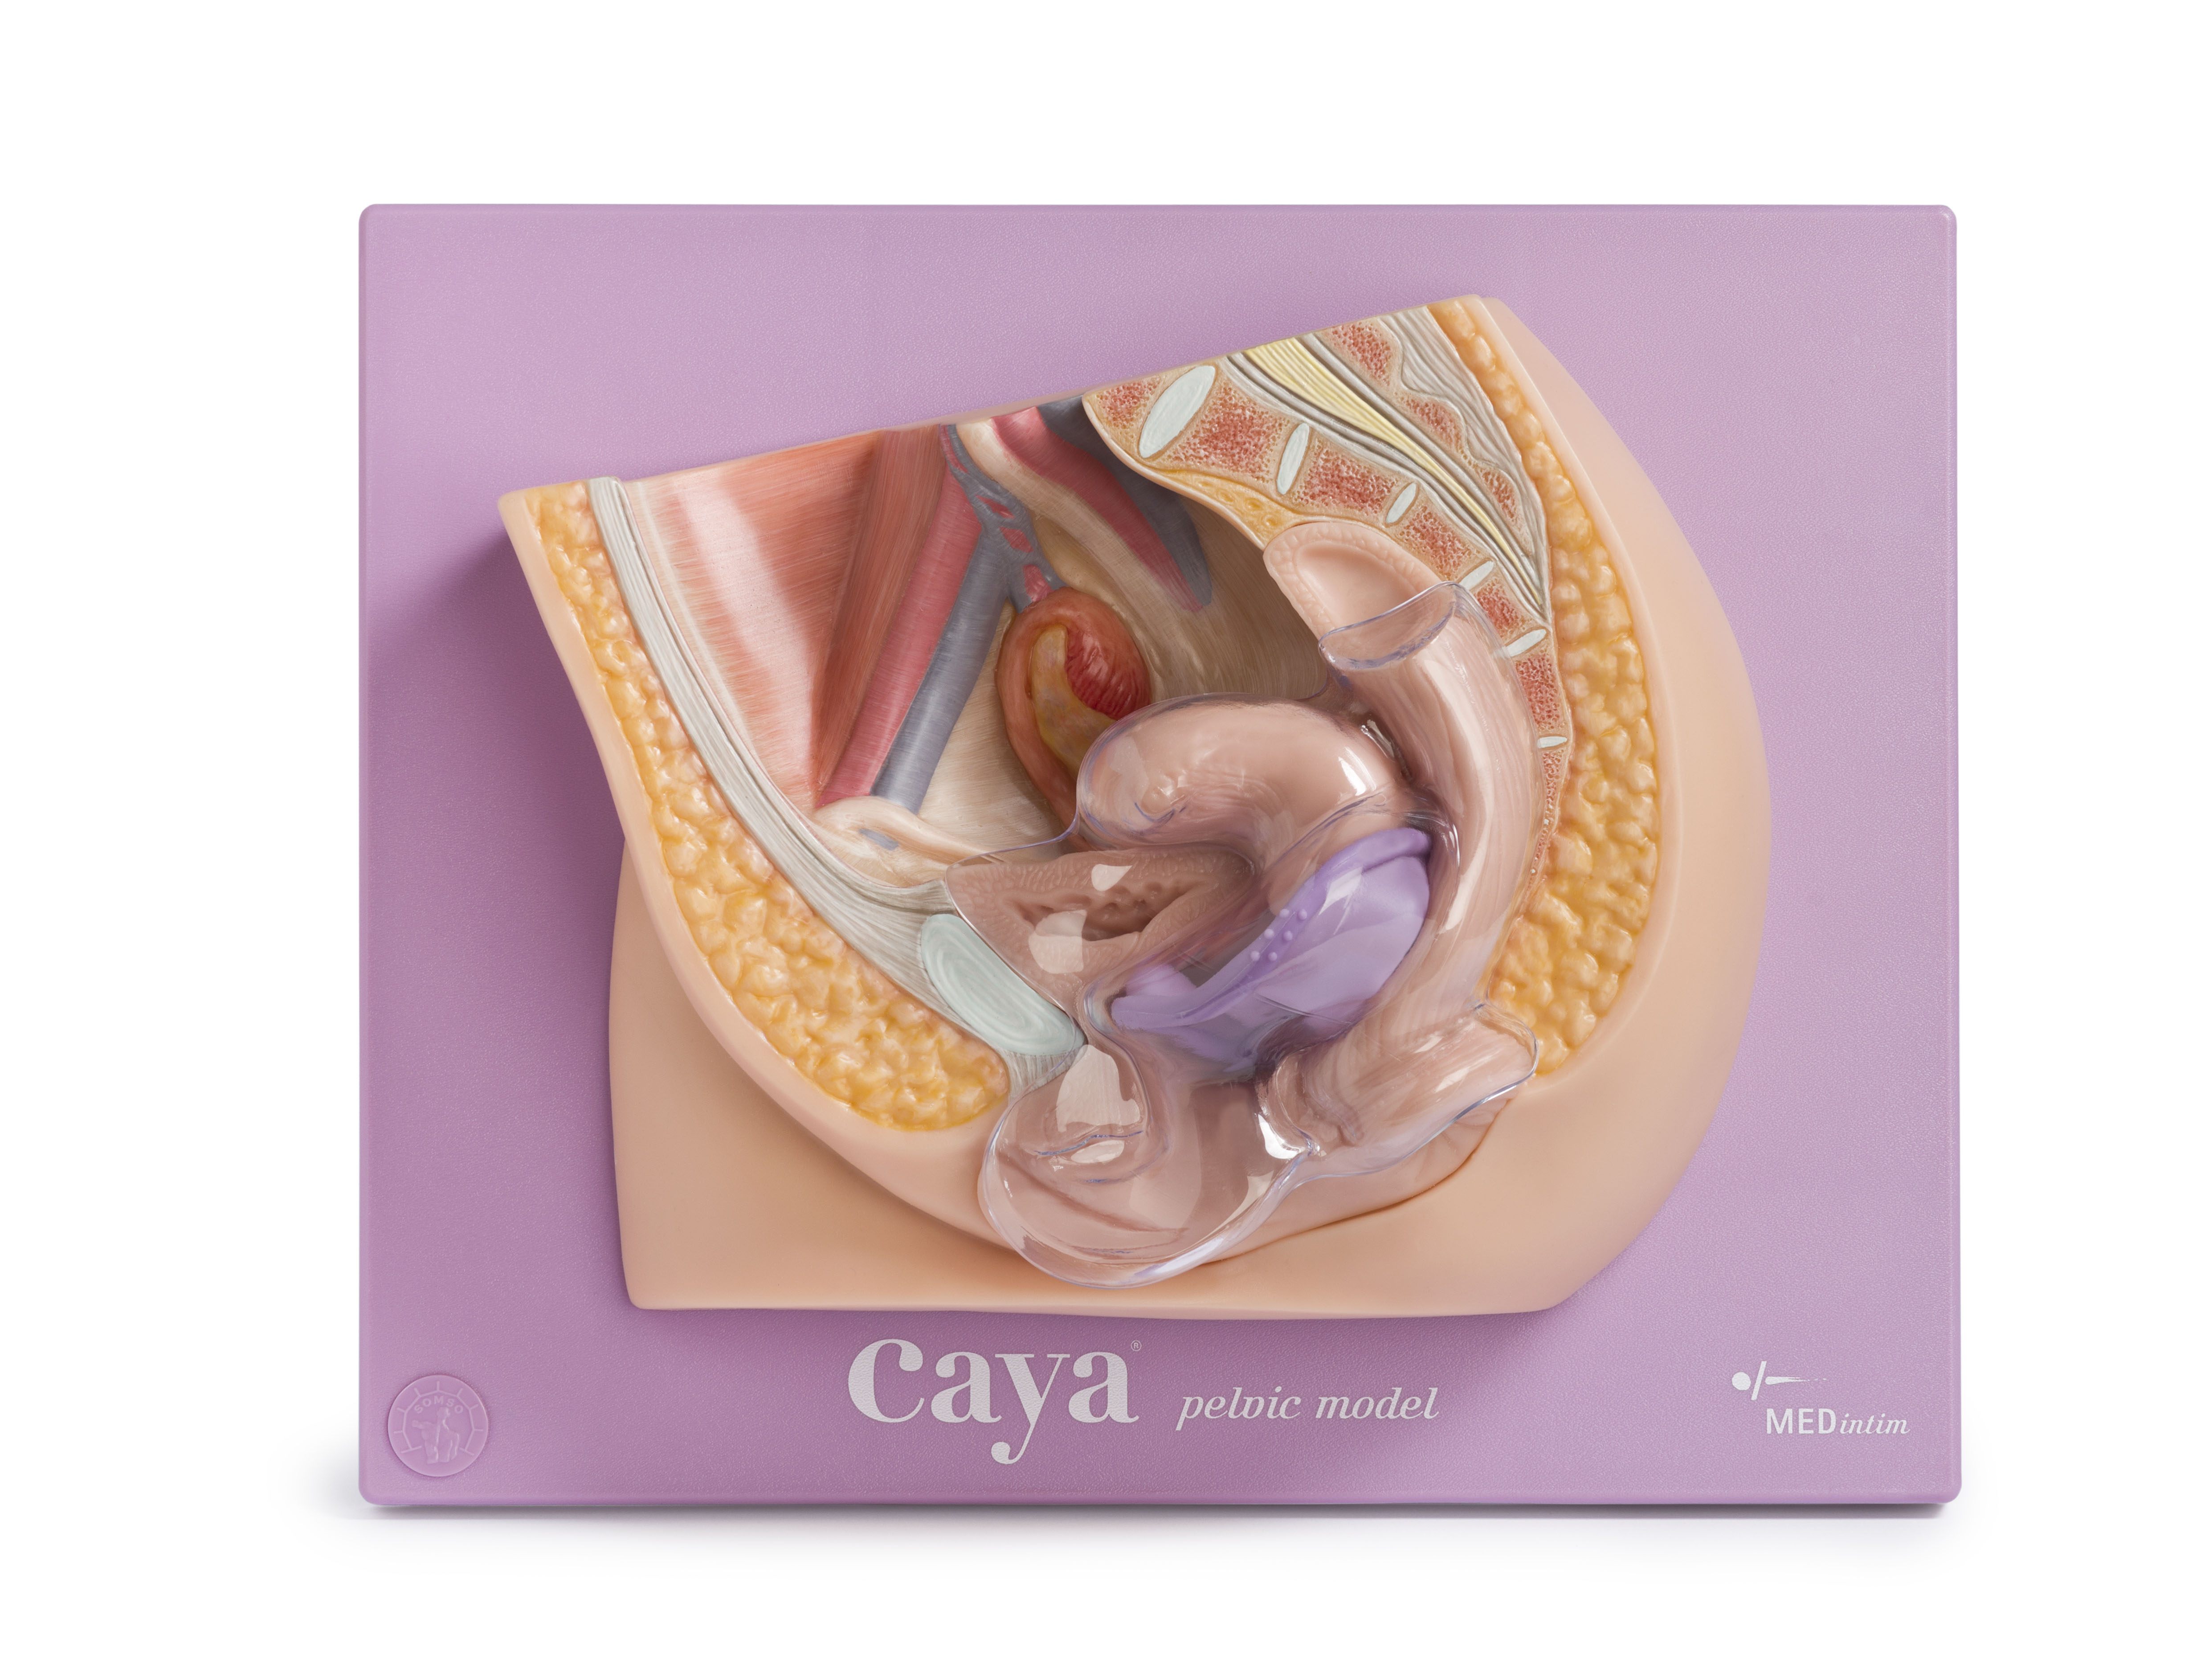 Caya® pelvic model | Beckenmodell